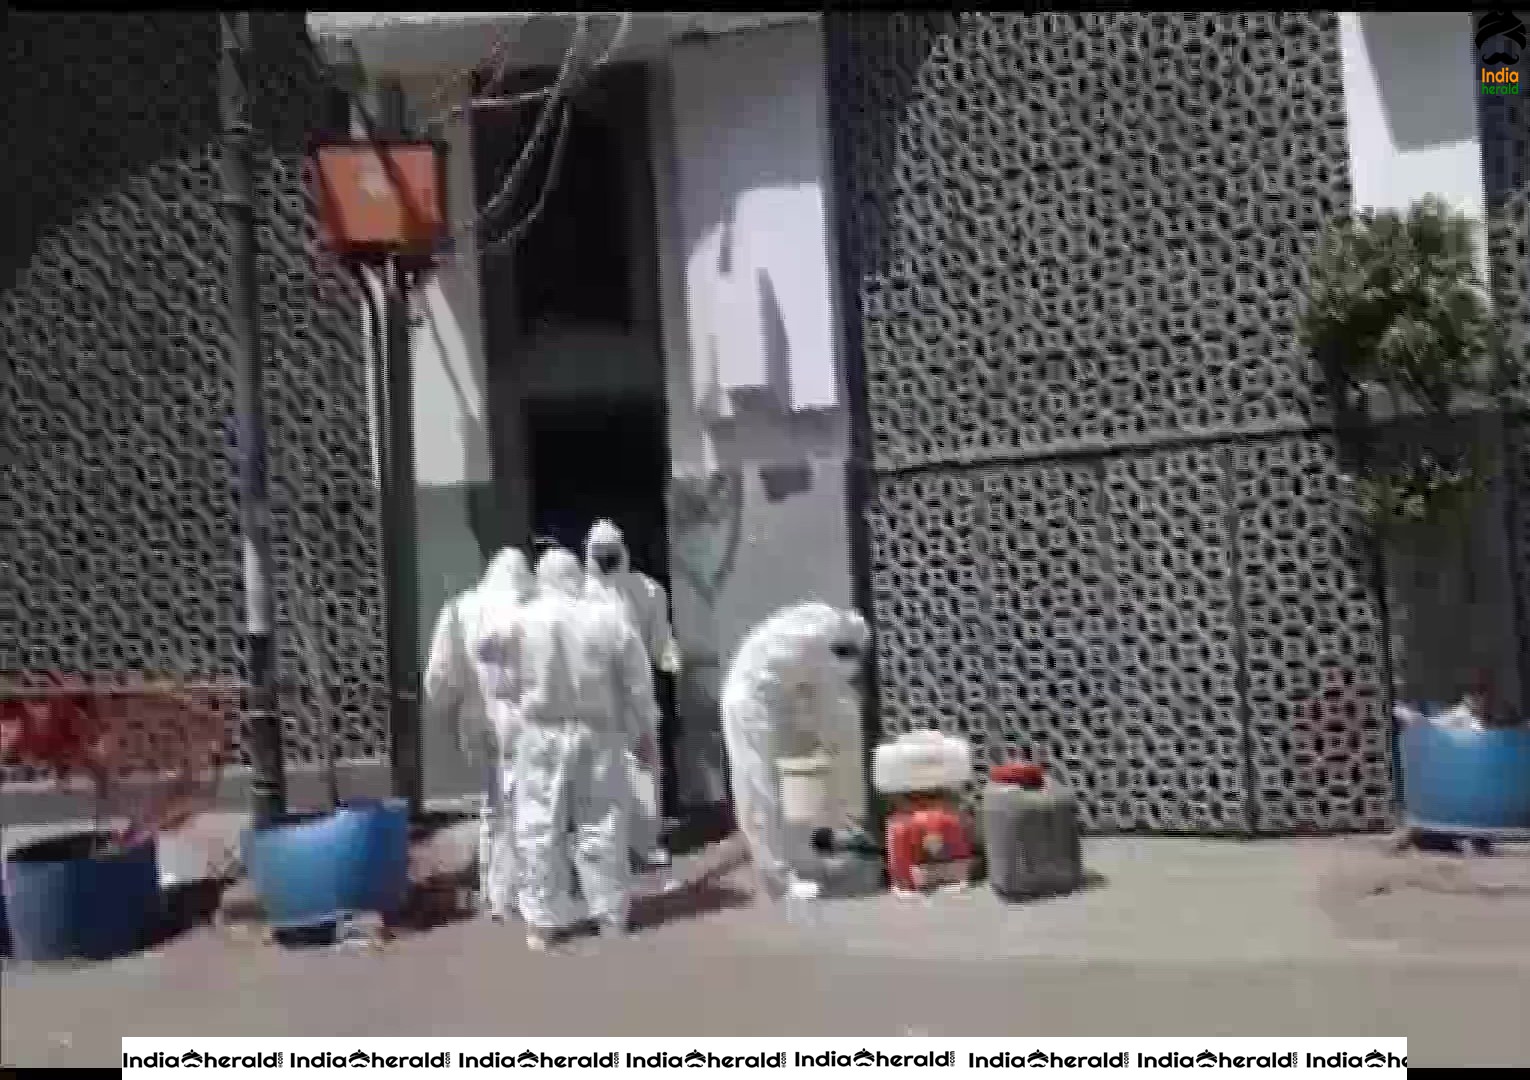 Markaz building in Nizamuddin sanitized as a religious gatherine violated Corona Virus Lockdown conditions